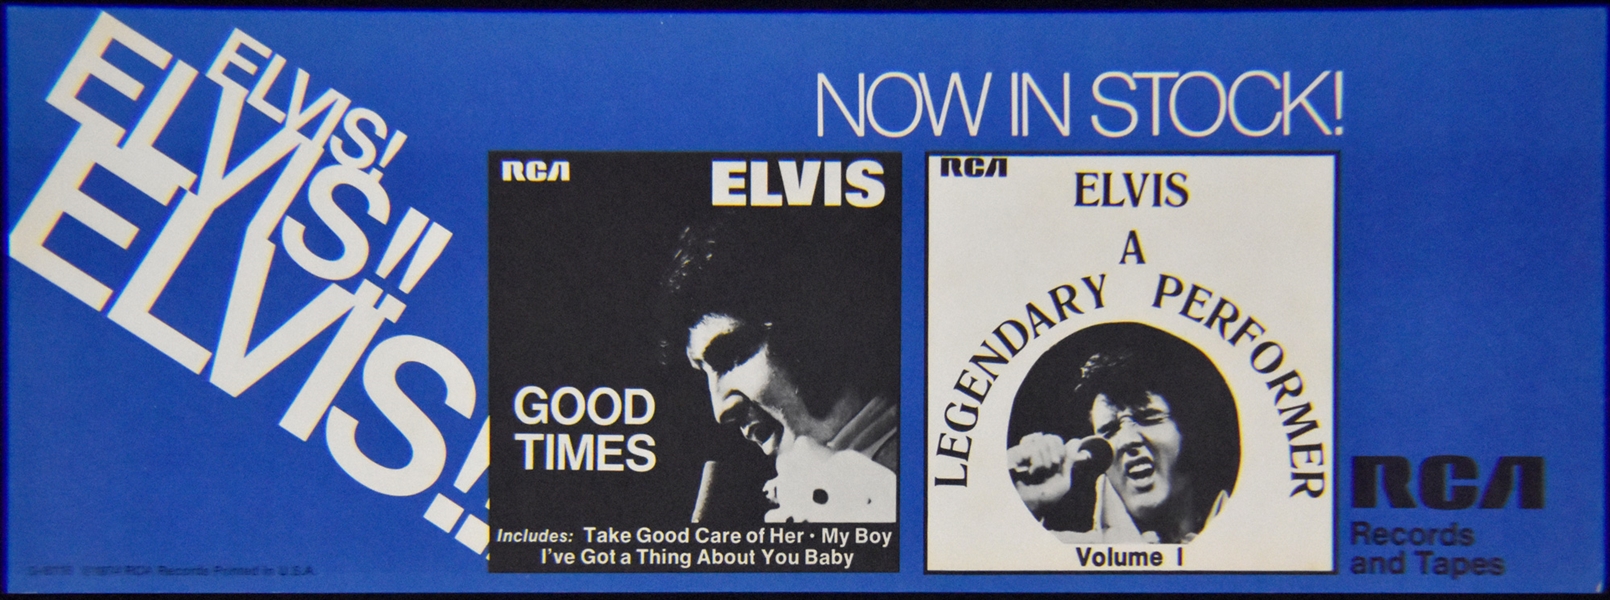 1974 Elvis Presley <em>Good Times/Elvis A Legendary Performer, Vol. 1</em> LPs RCA Record Store Promotional Poster